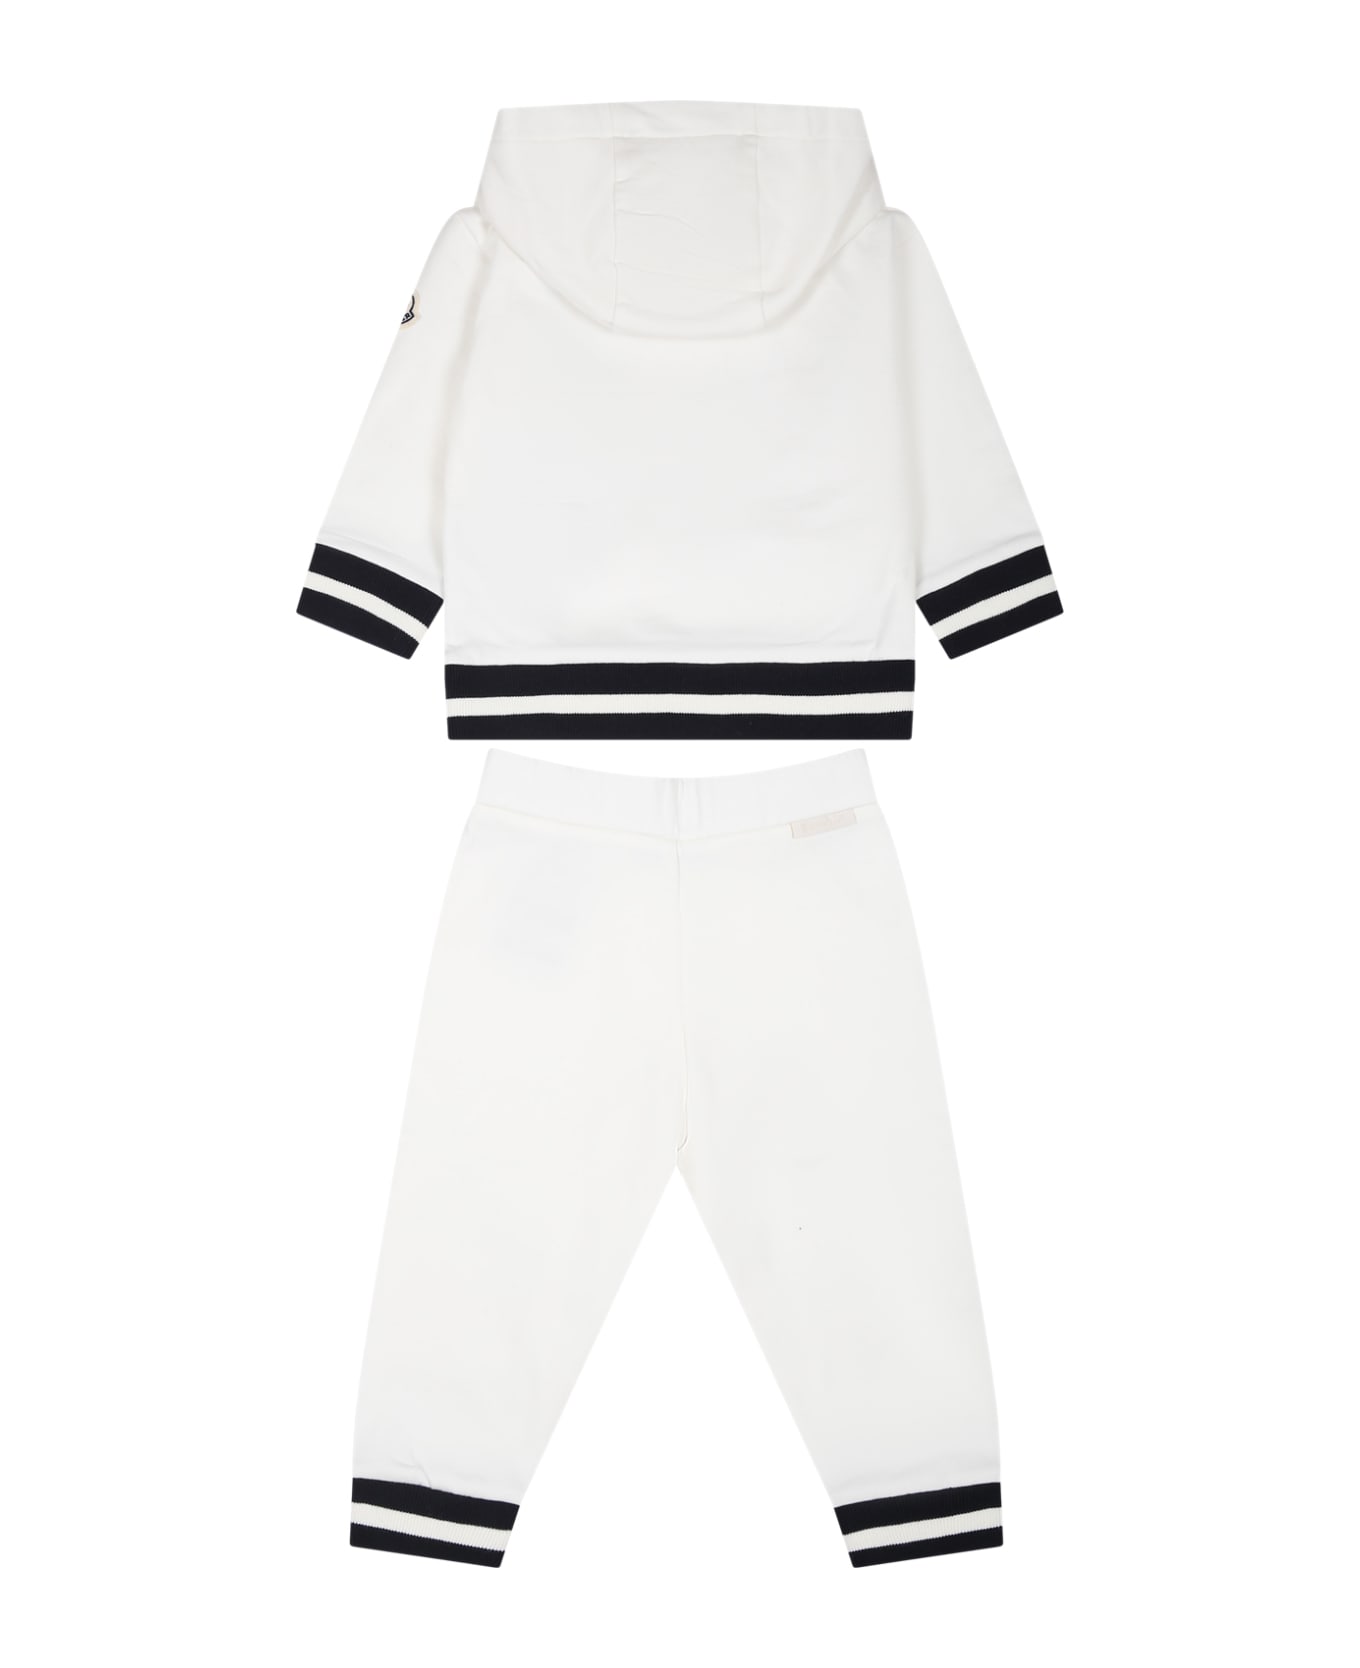 Moncler White Set For Baby Boy With Logo - White ボトムス